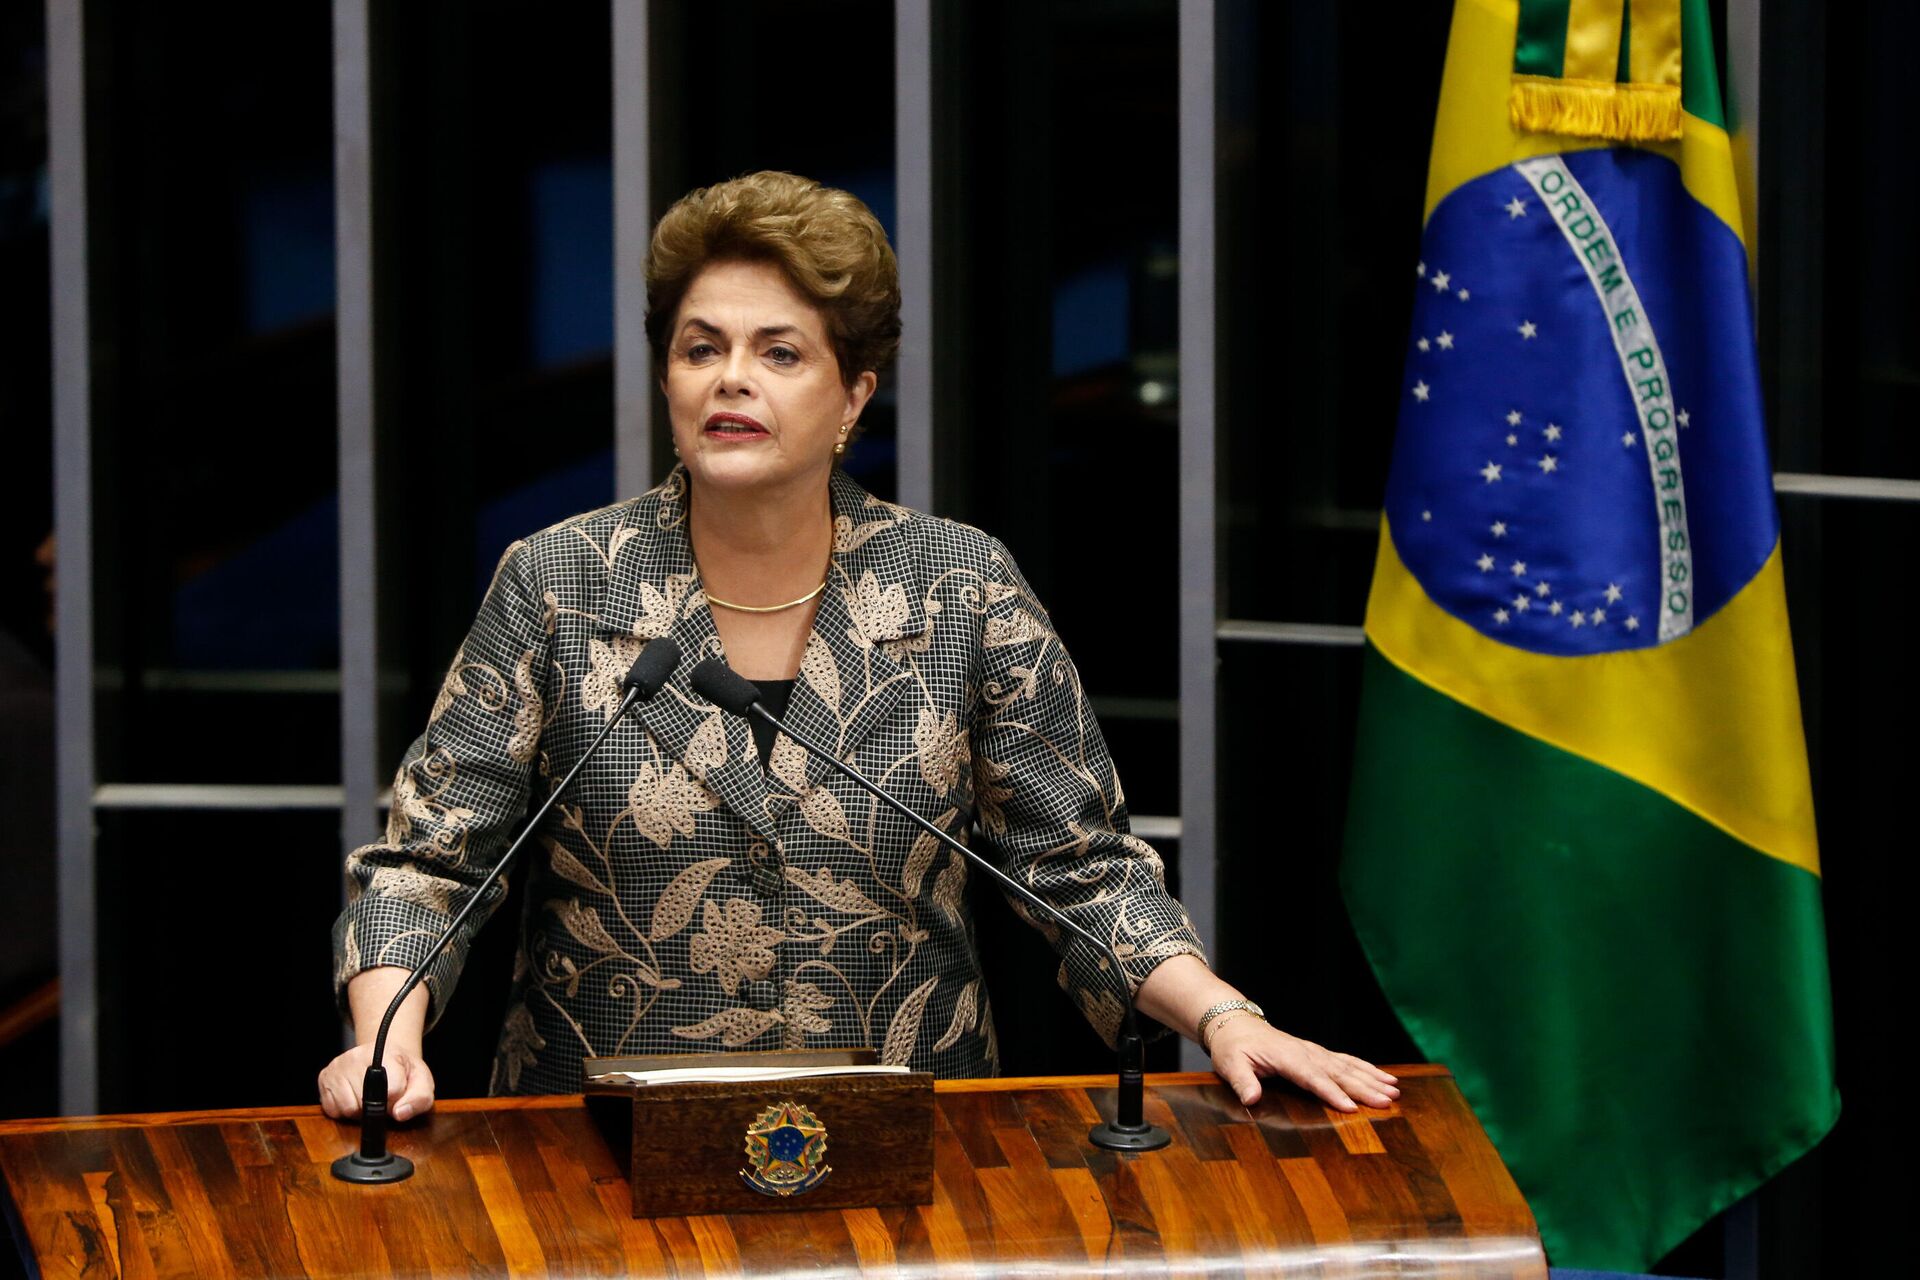 A ex-presidente Dilma Rousseff discursa na Câmara dos Deputados - Sputnik Brasil, 1920, 02.10.2022